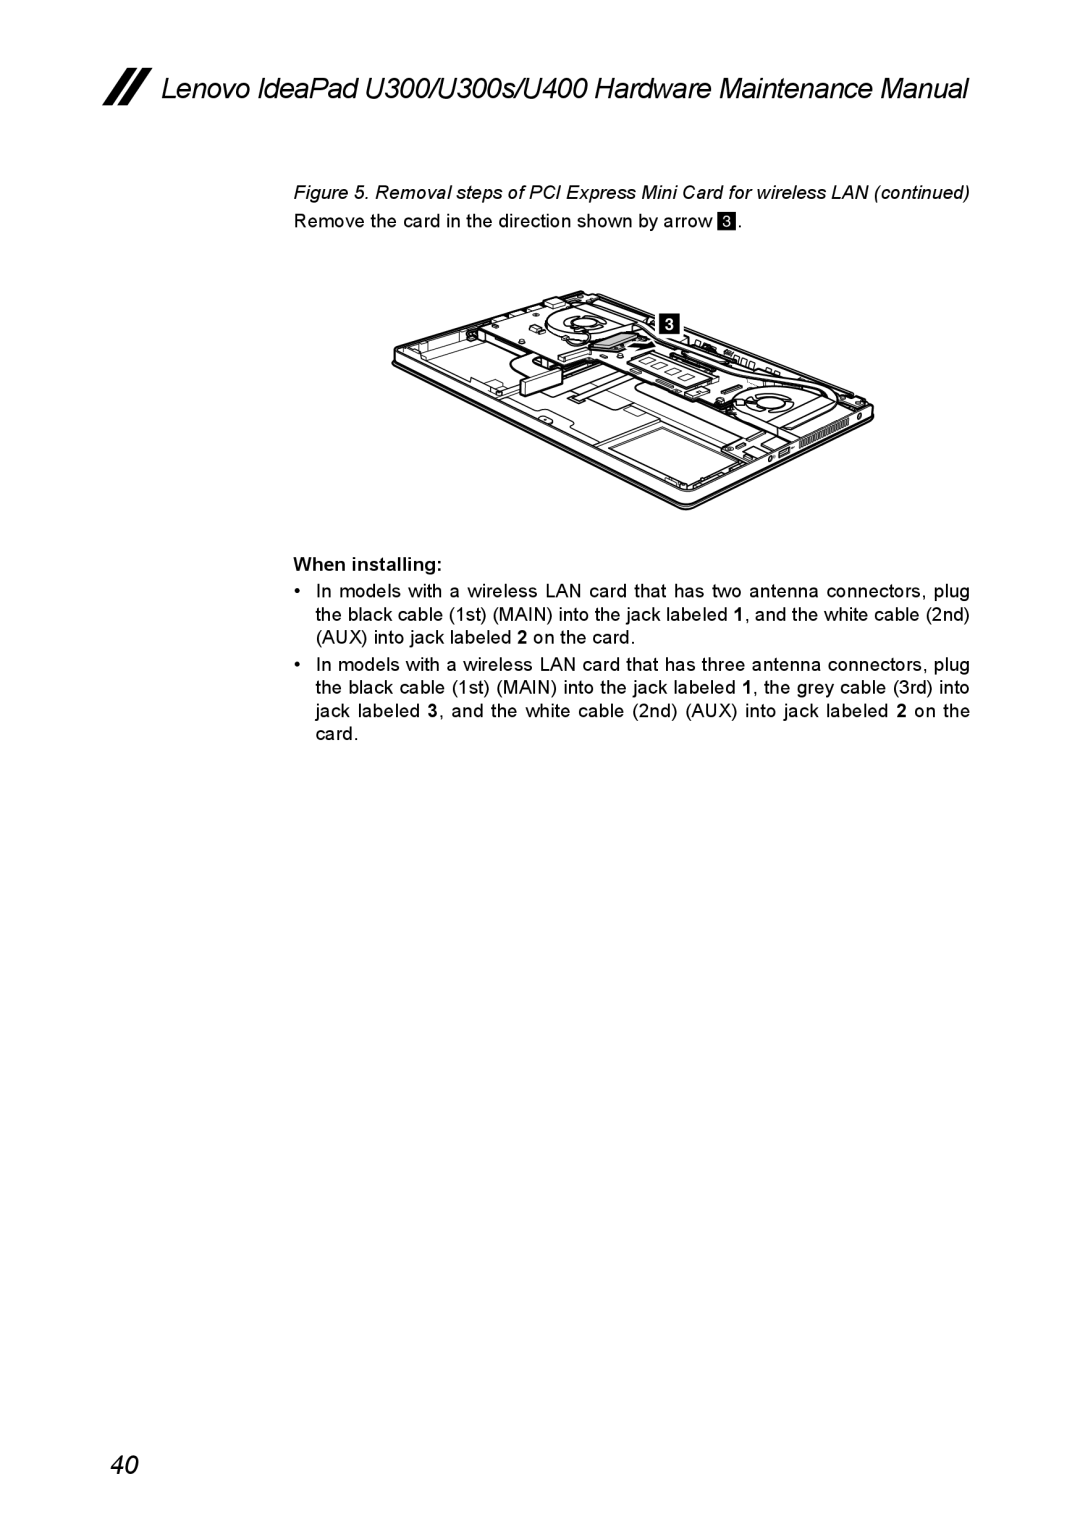 Lenovo U300S manual When installing, Lenovo IdeaPad U300/U300s/U400 Hardware Maintenance Manual 